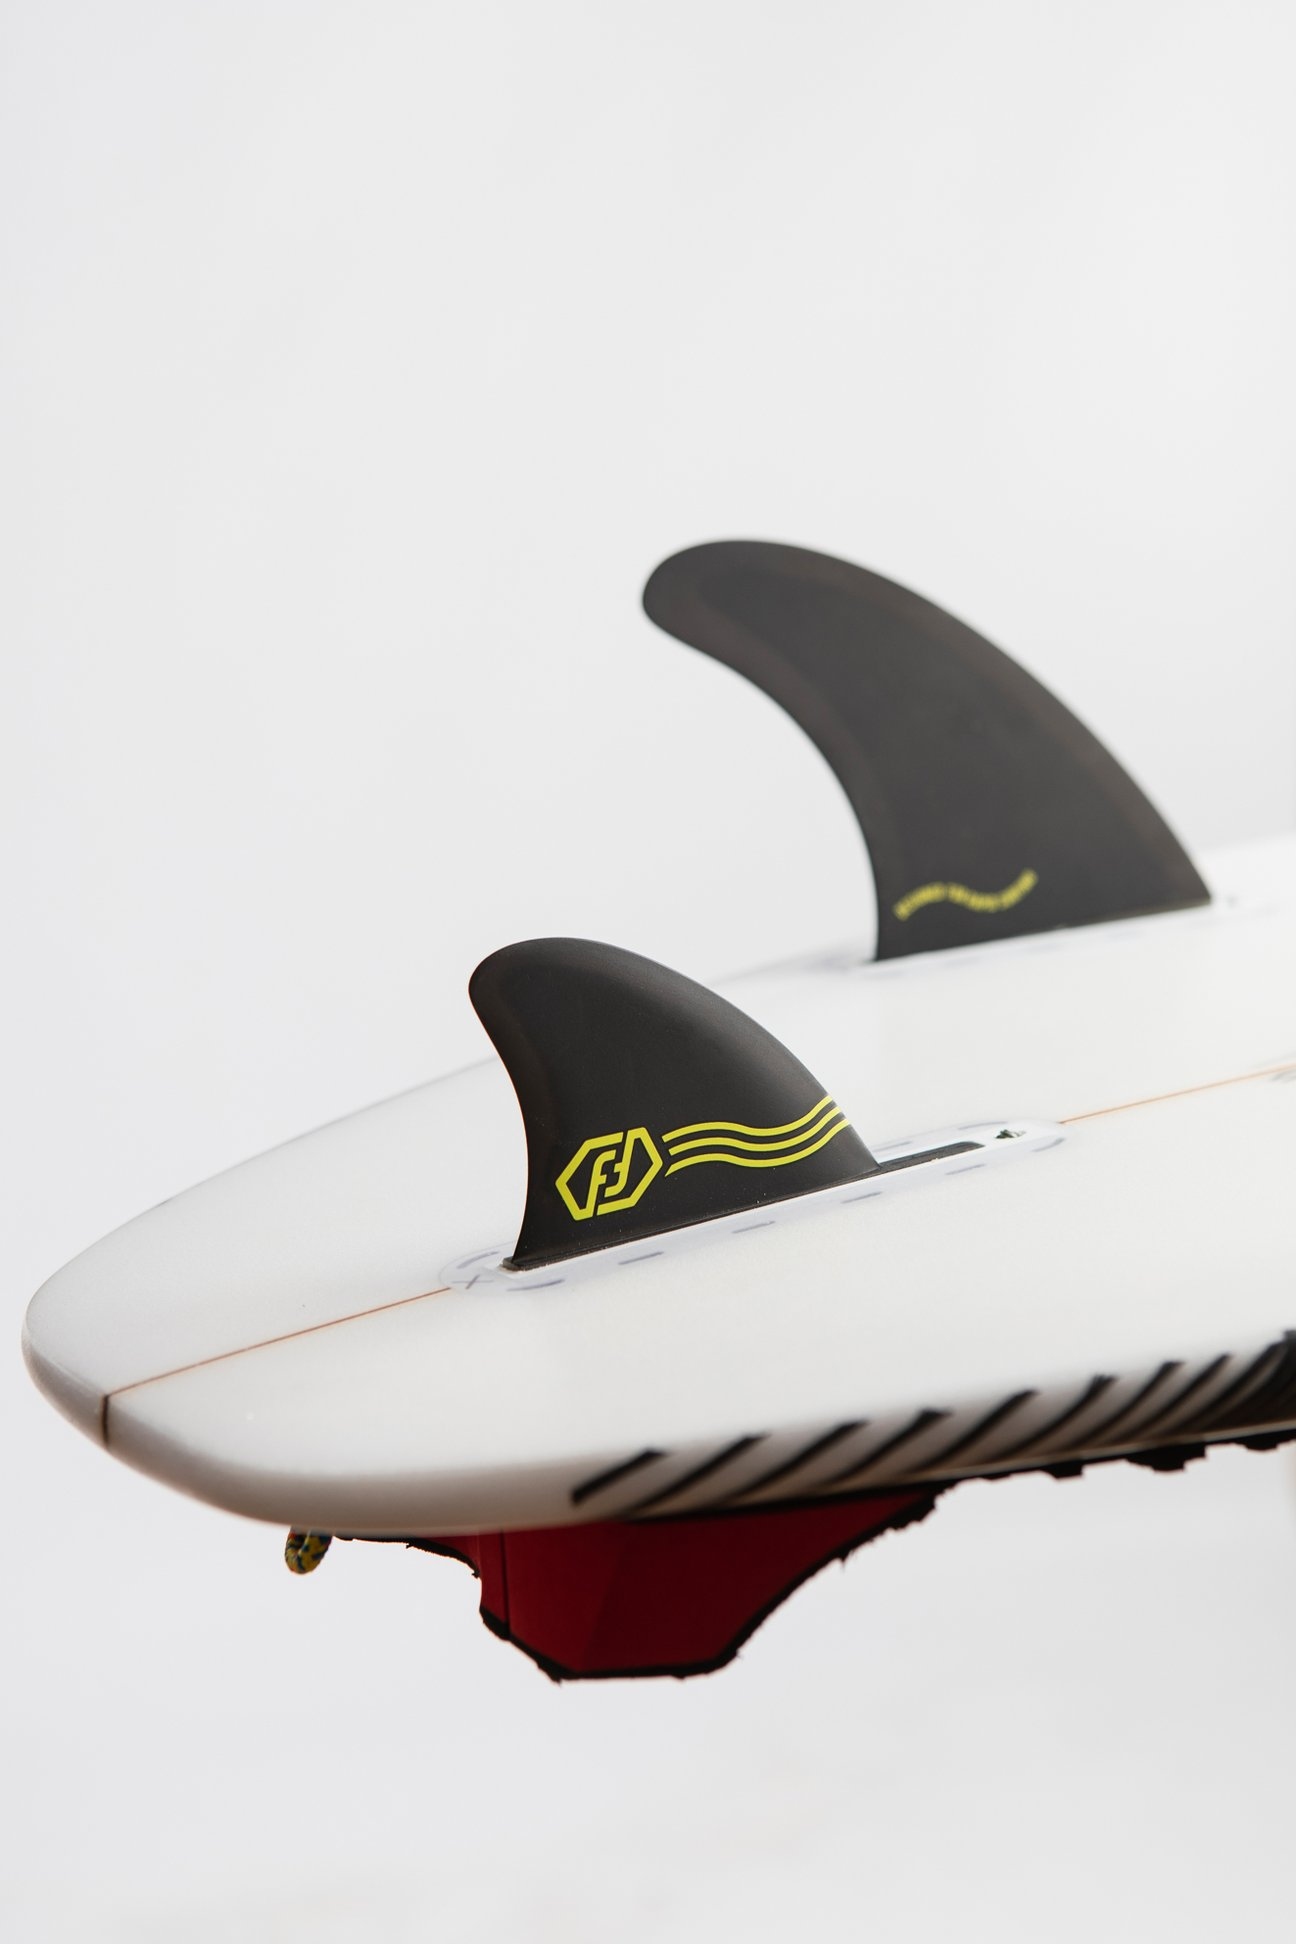 Feather Fins Ultralight HC Rapid Surfing